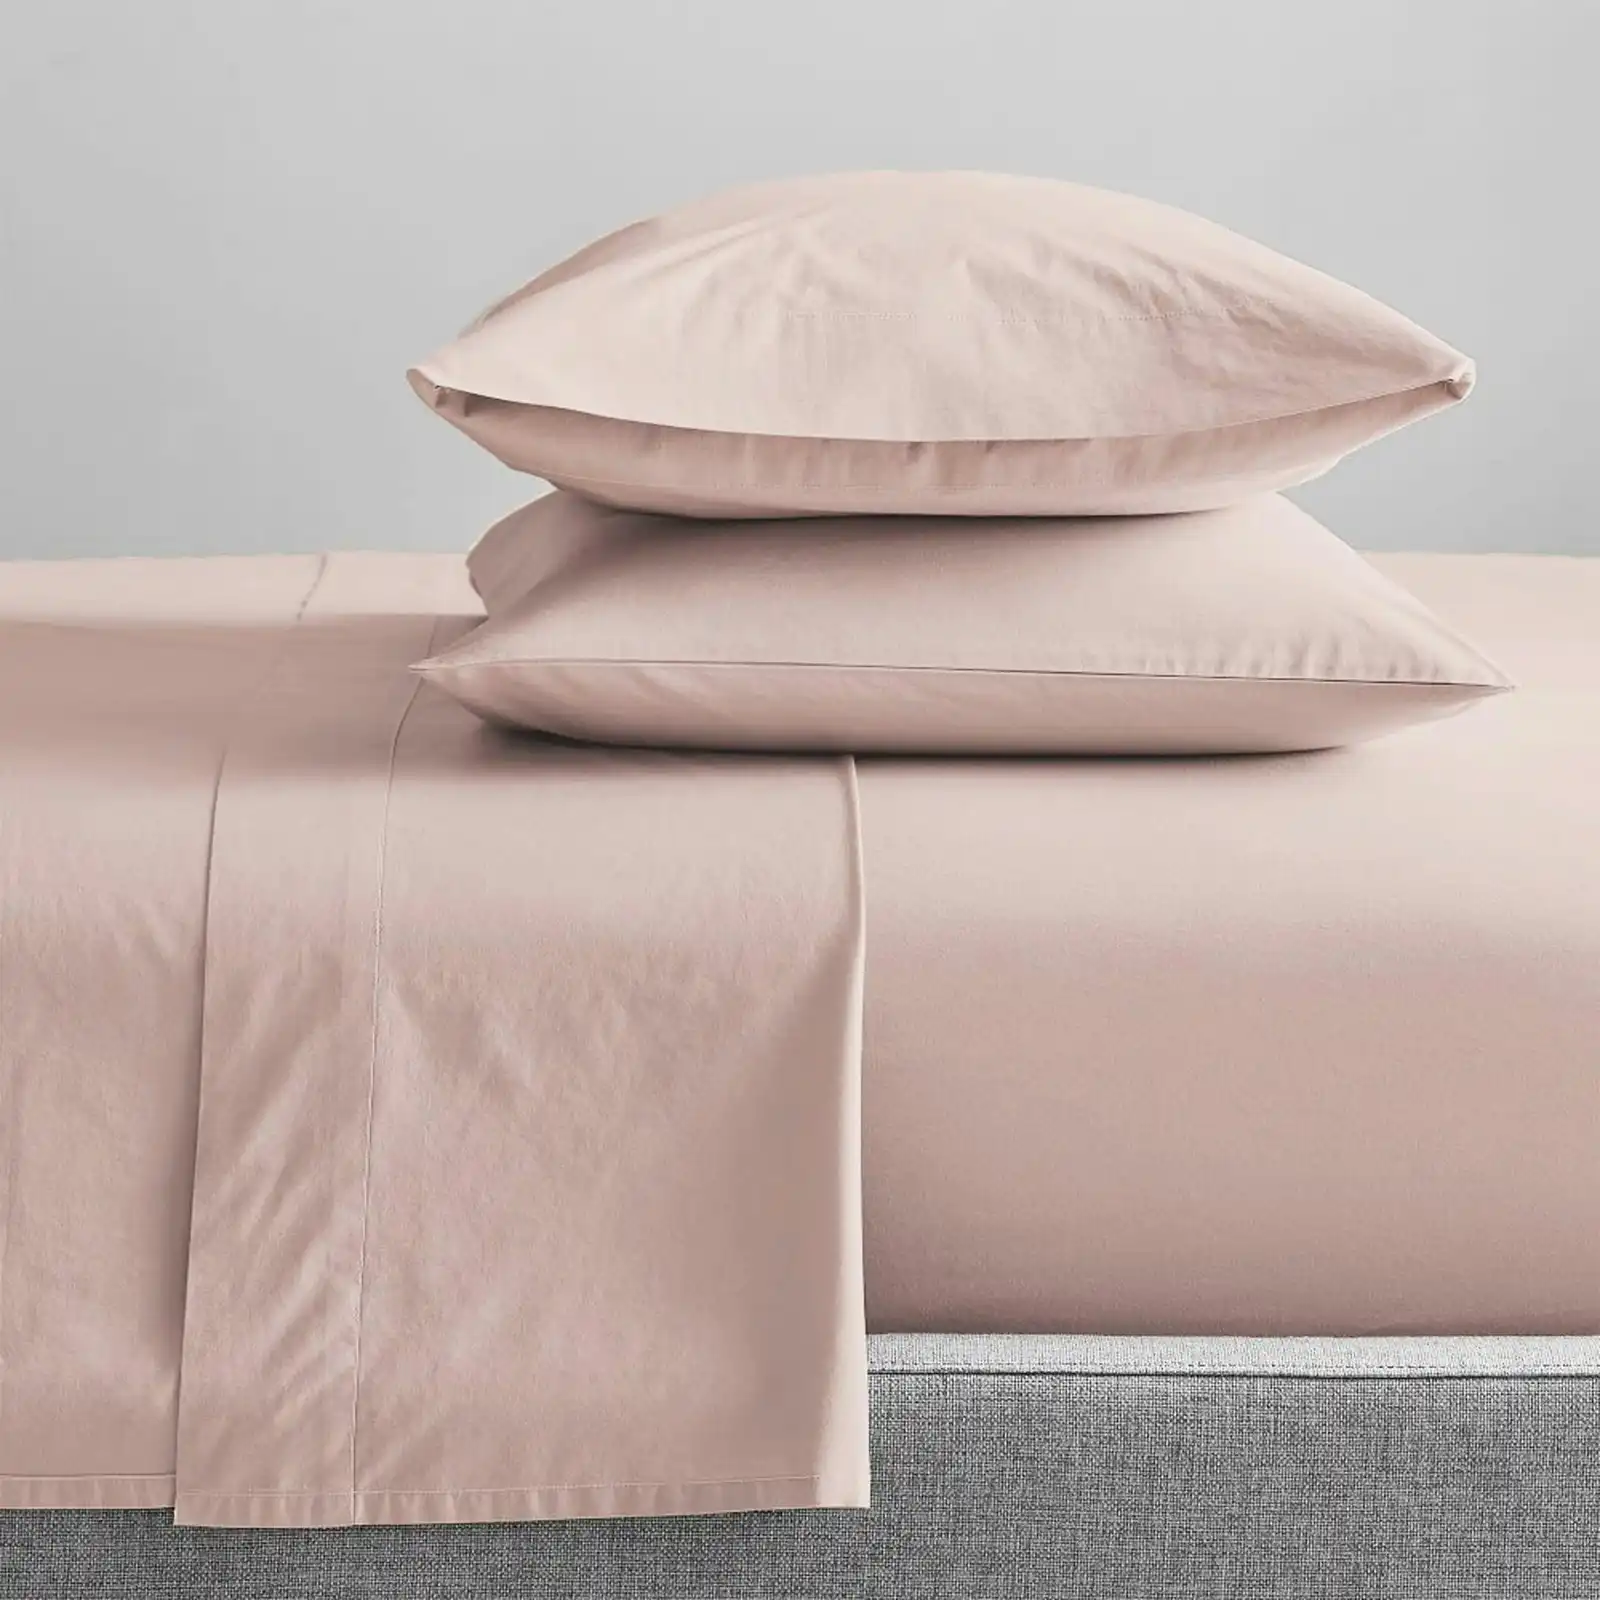 Renee Taylor Queen Sheet/Pillowcase Set 300TC Organic Cotton Bedding Sepia Rose